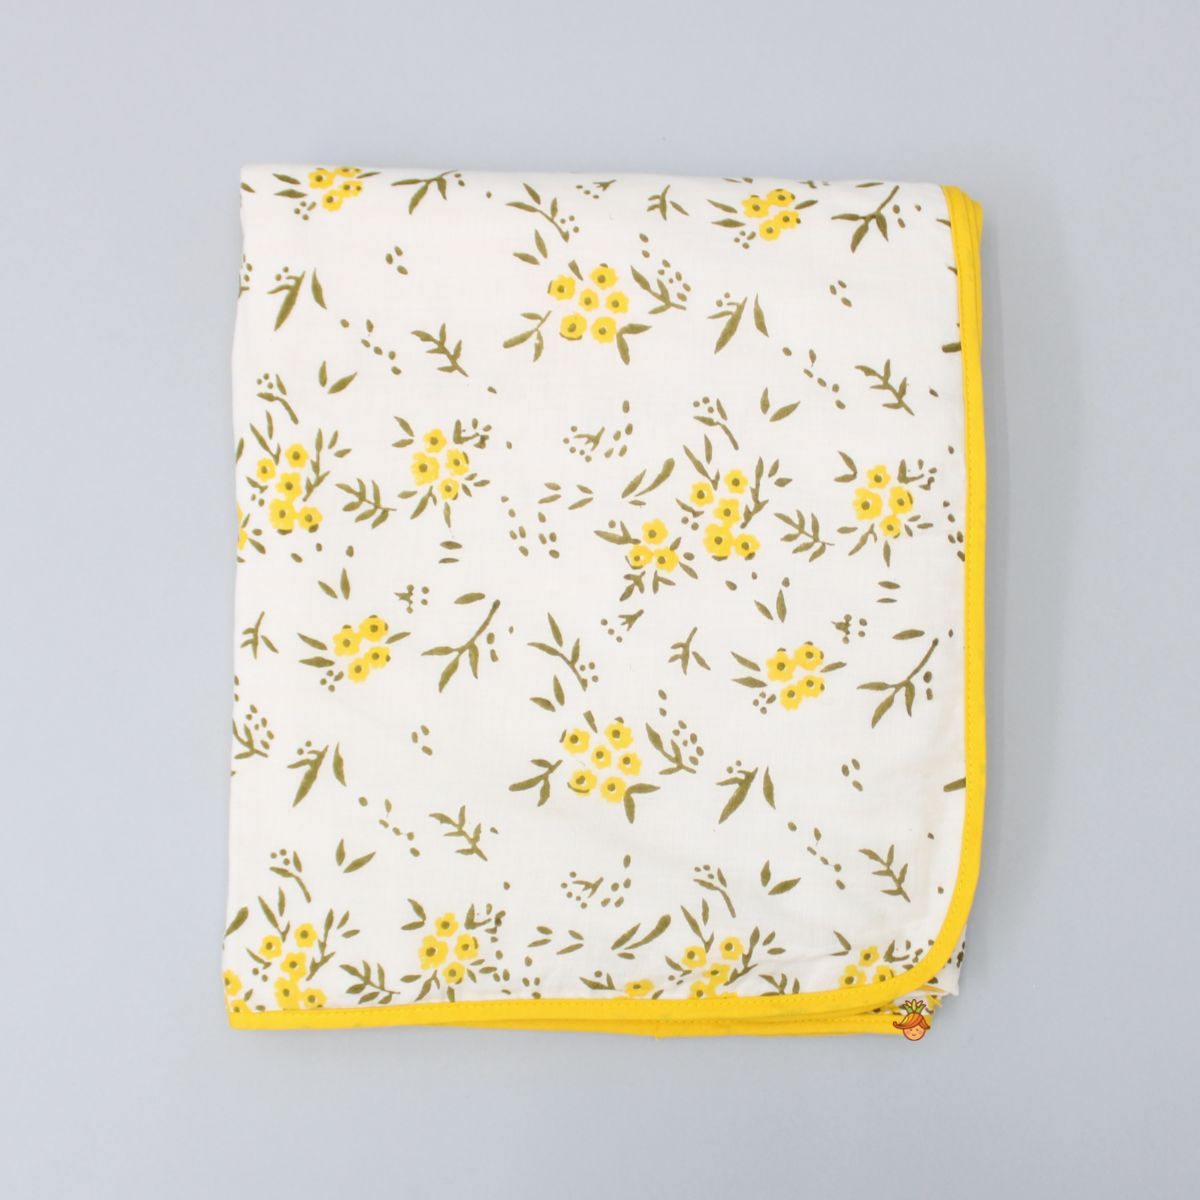 Wildflowers Printed Striped Yellow Blanket